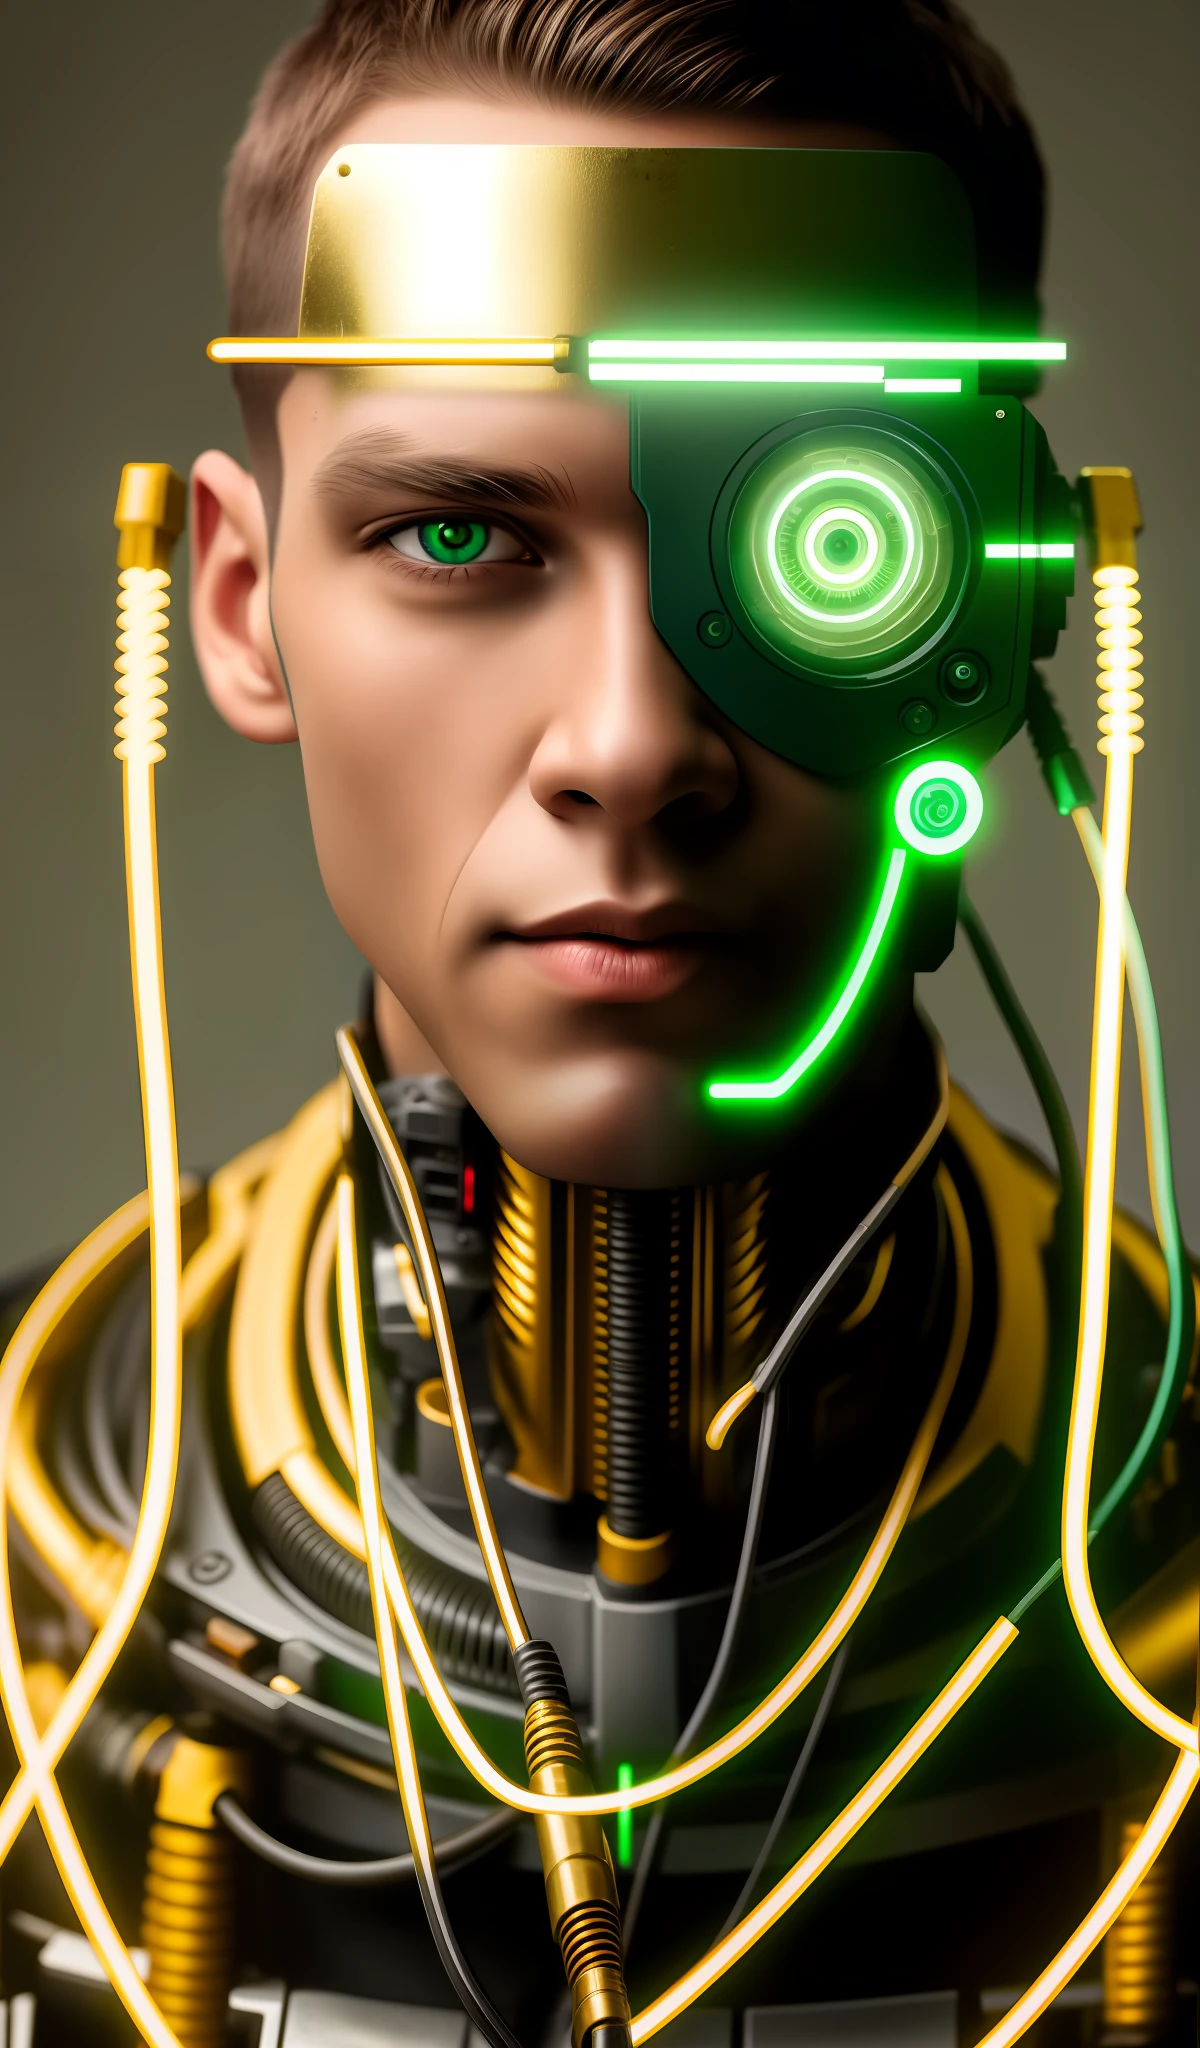 Cyborg Man Medium Shot, voller Kopf, grüne Augen, Overall, Modell Gesicht, Freiliegende Drähte, Goldöl tritt aus rostigen Drähten aus